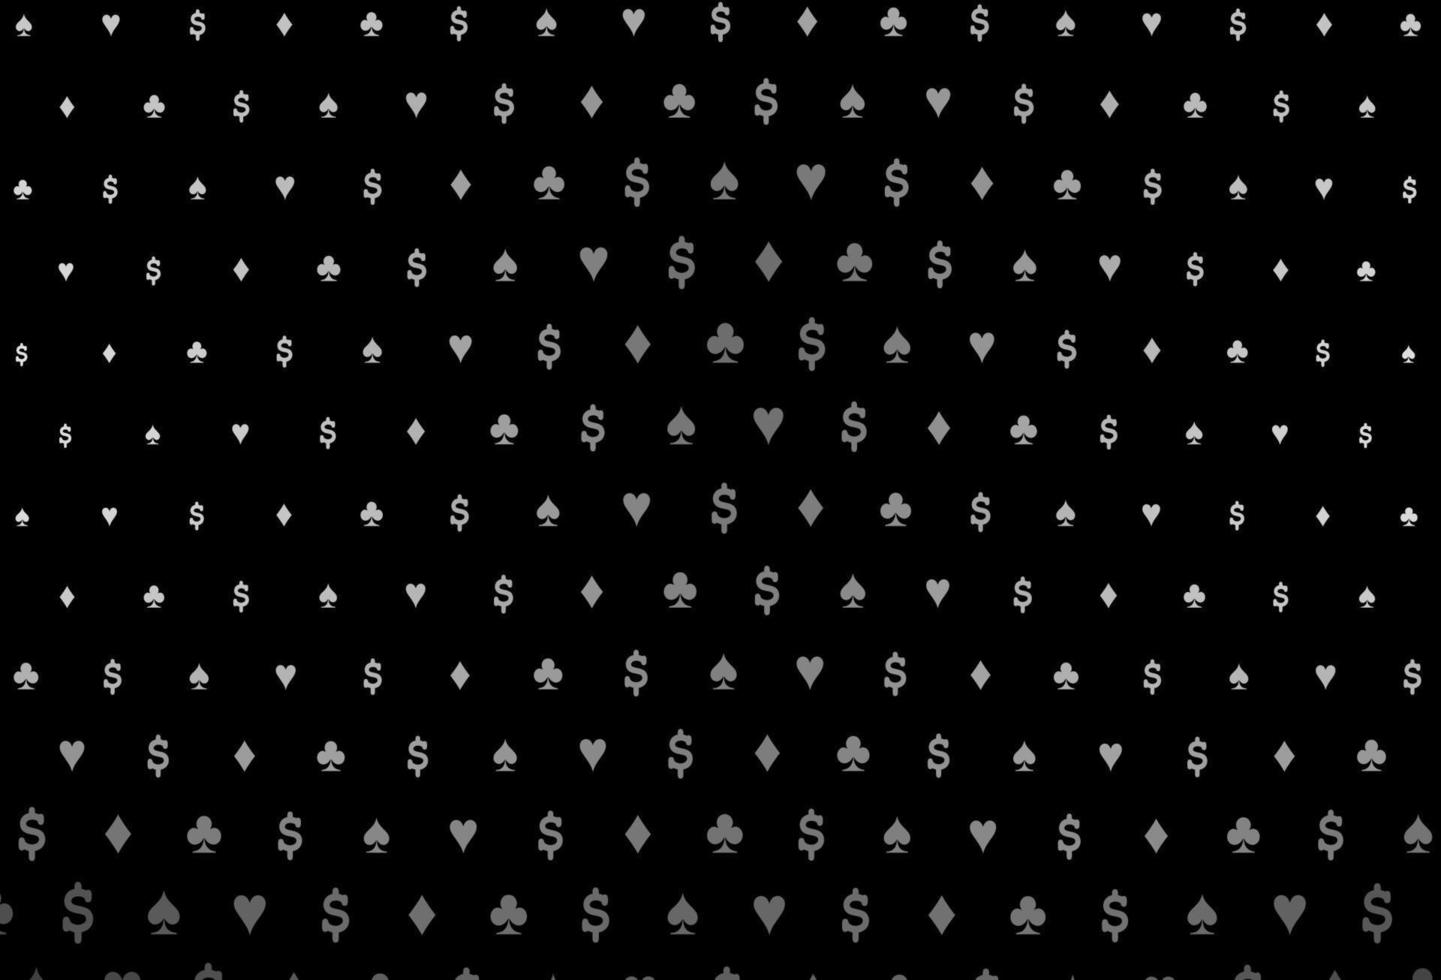 Plantilla de vector gris plateado oscuro con símbolos de póquer.